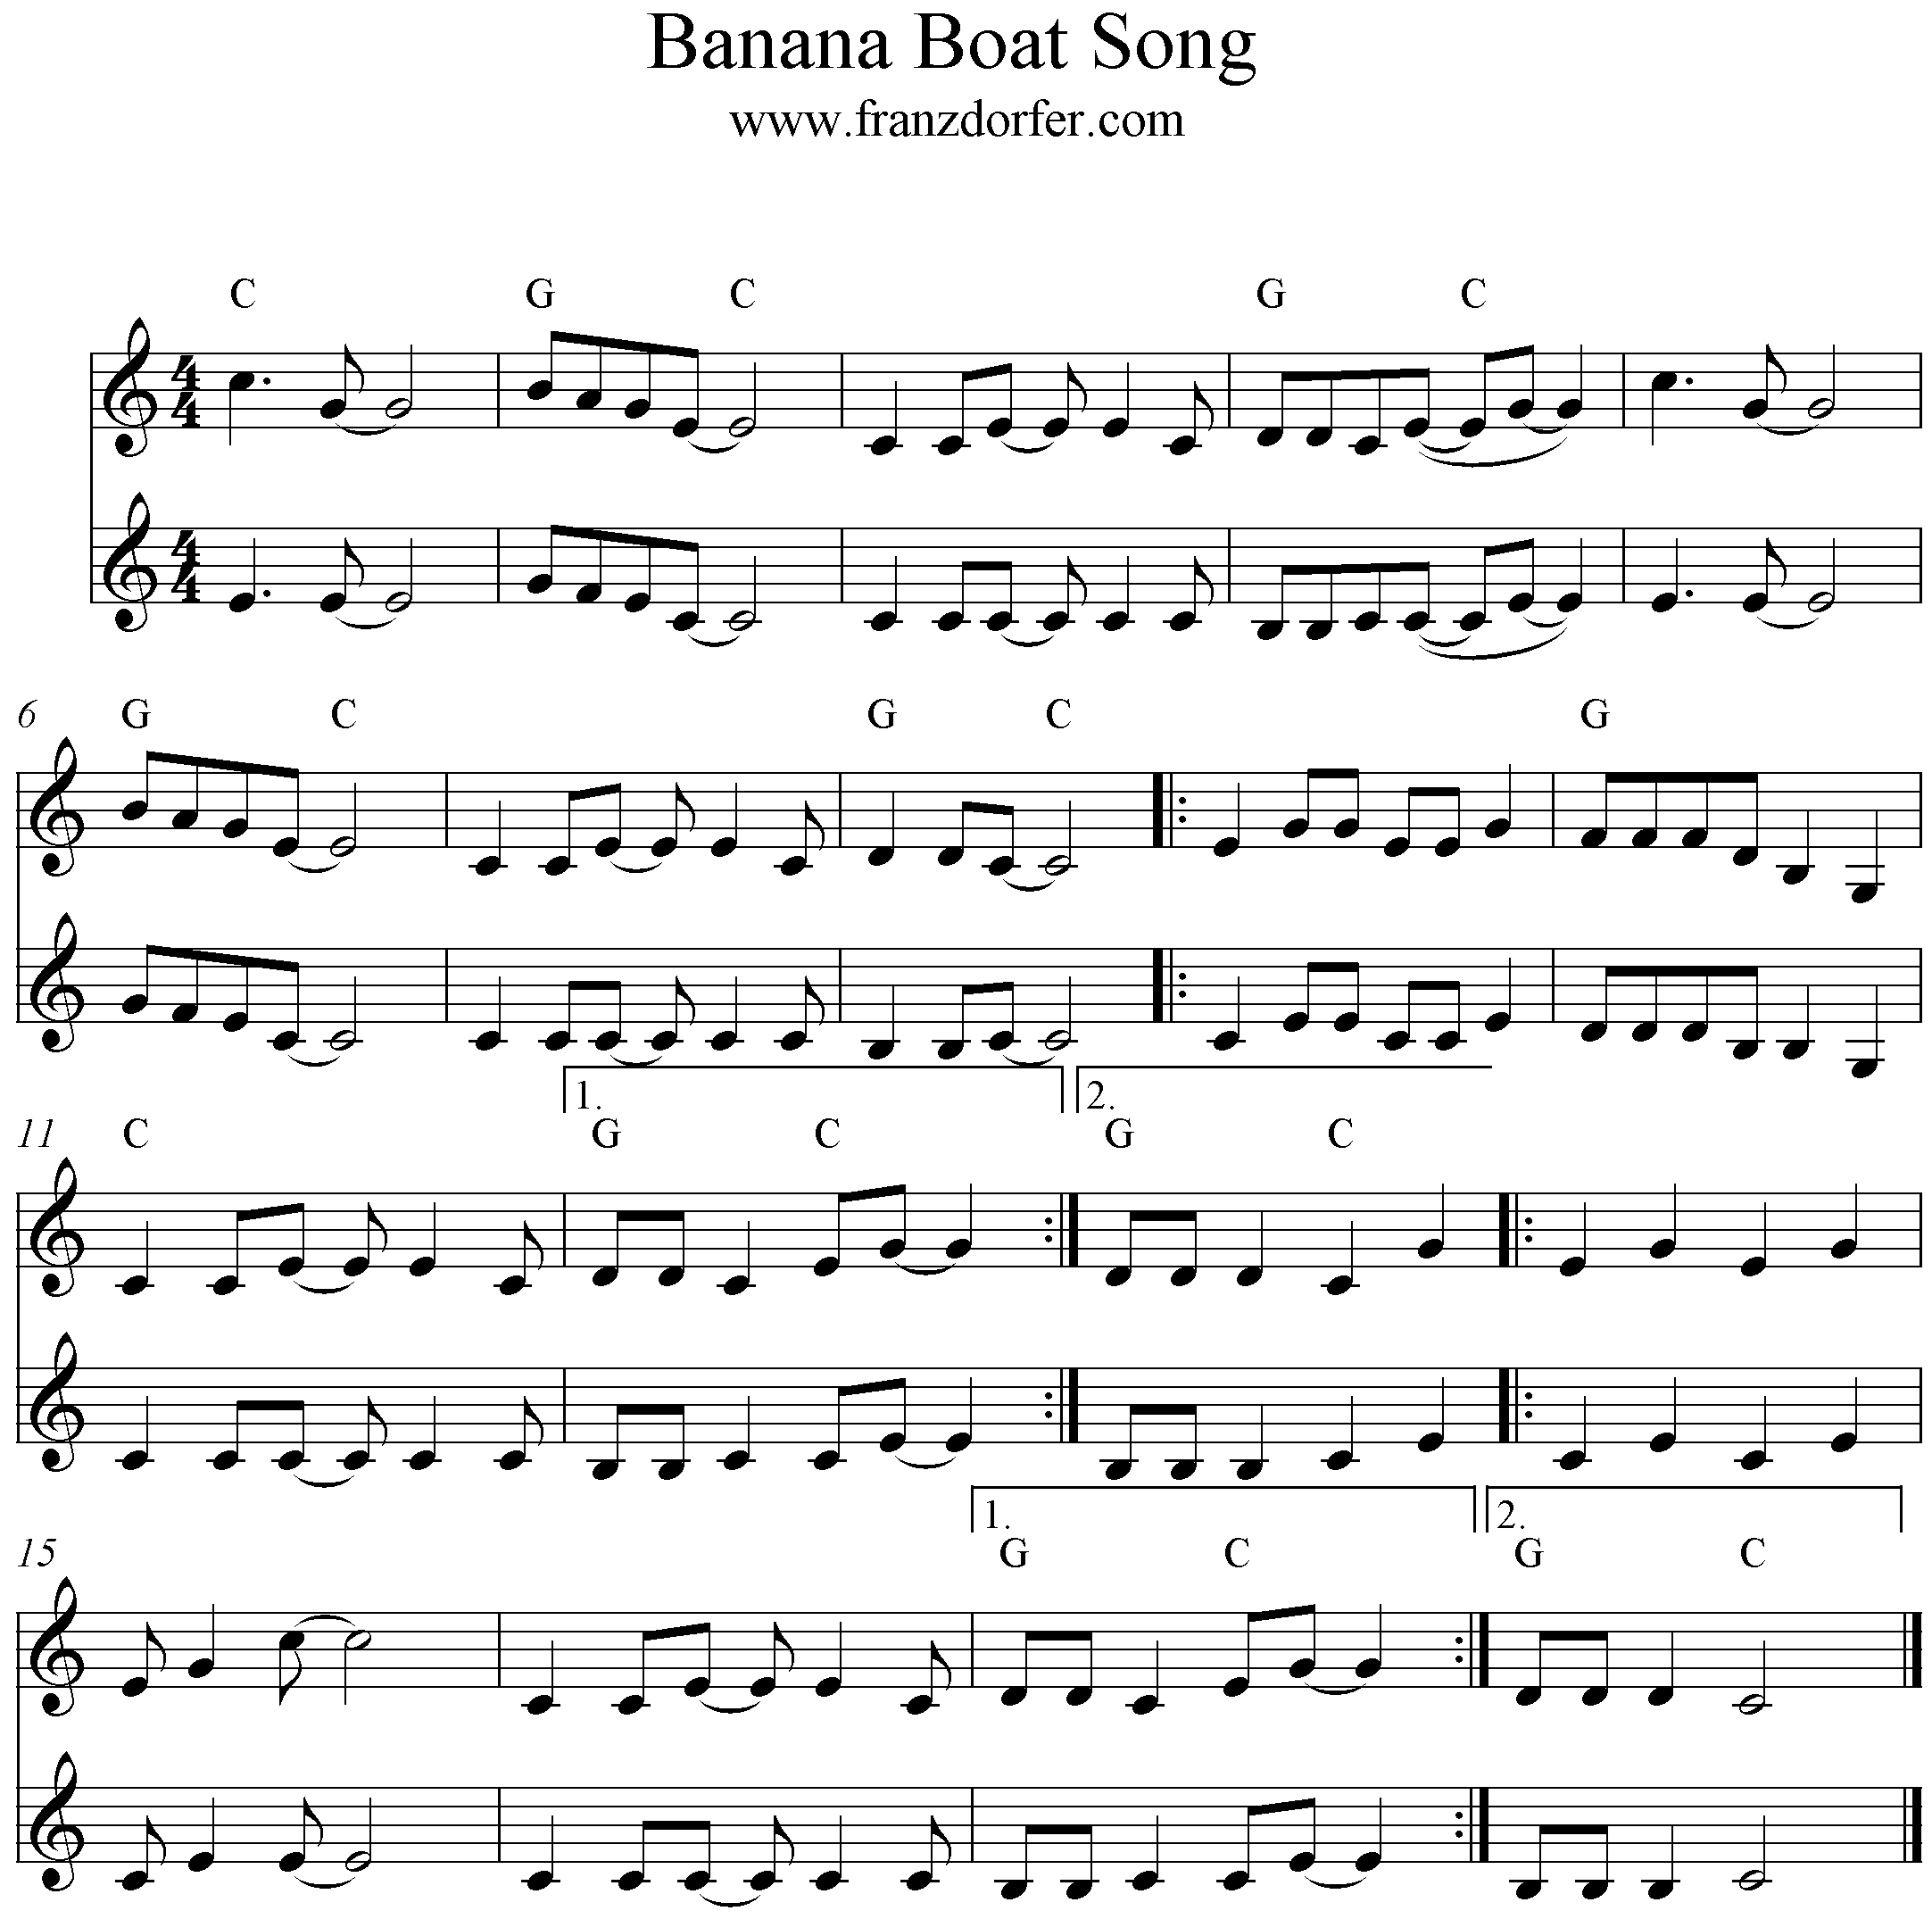 Banana Boat Song, Klarinette, 2 stimmig, Clarinet, Duo, C-Major